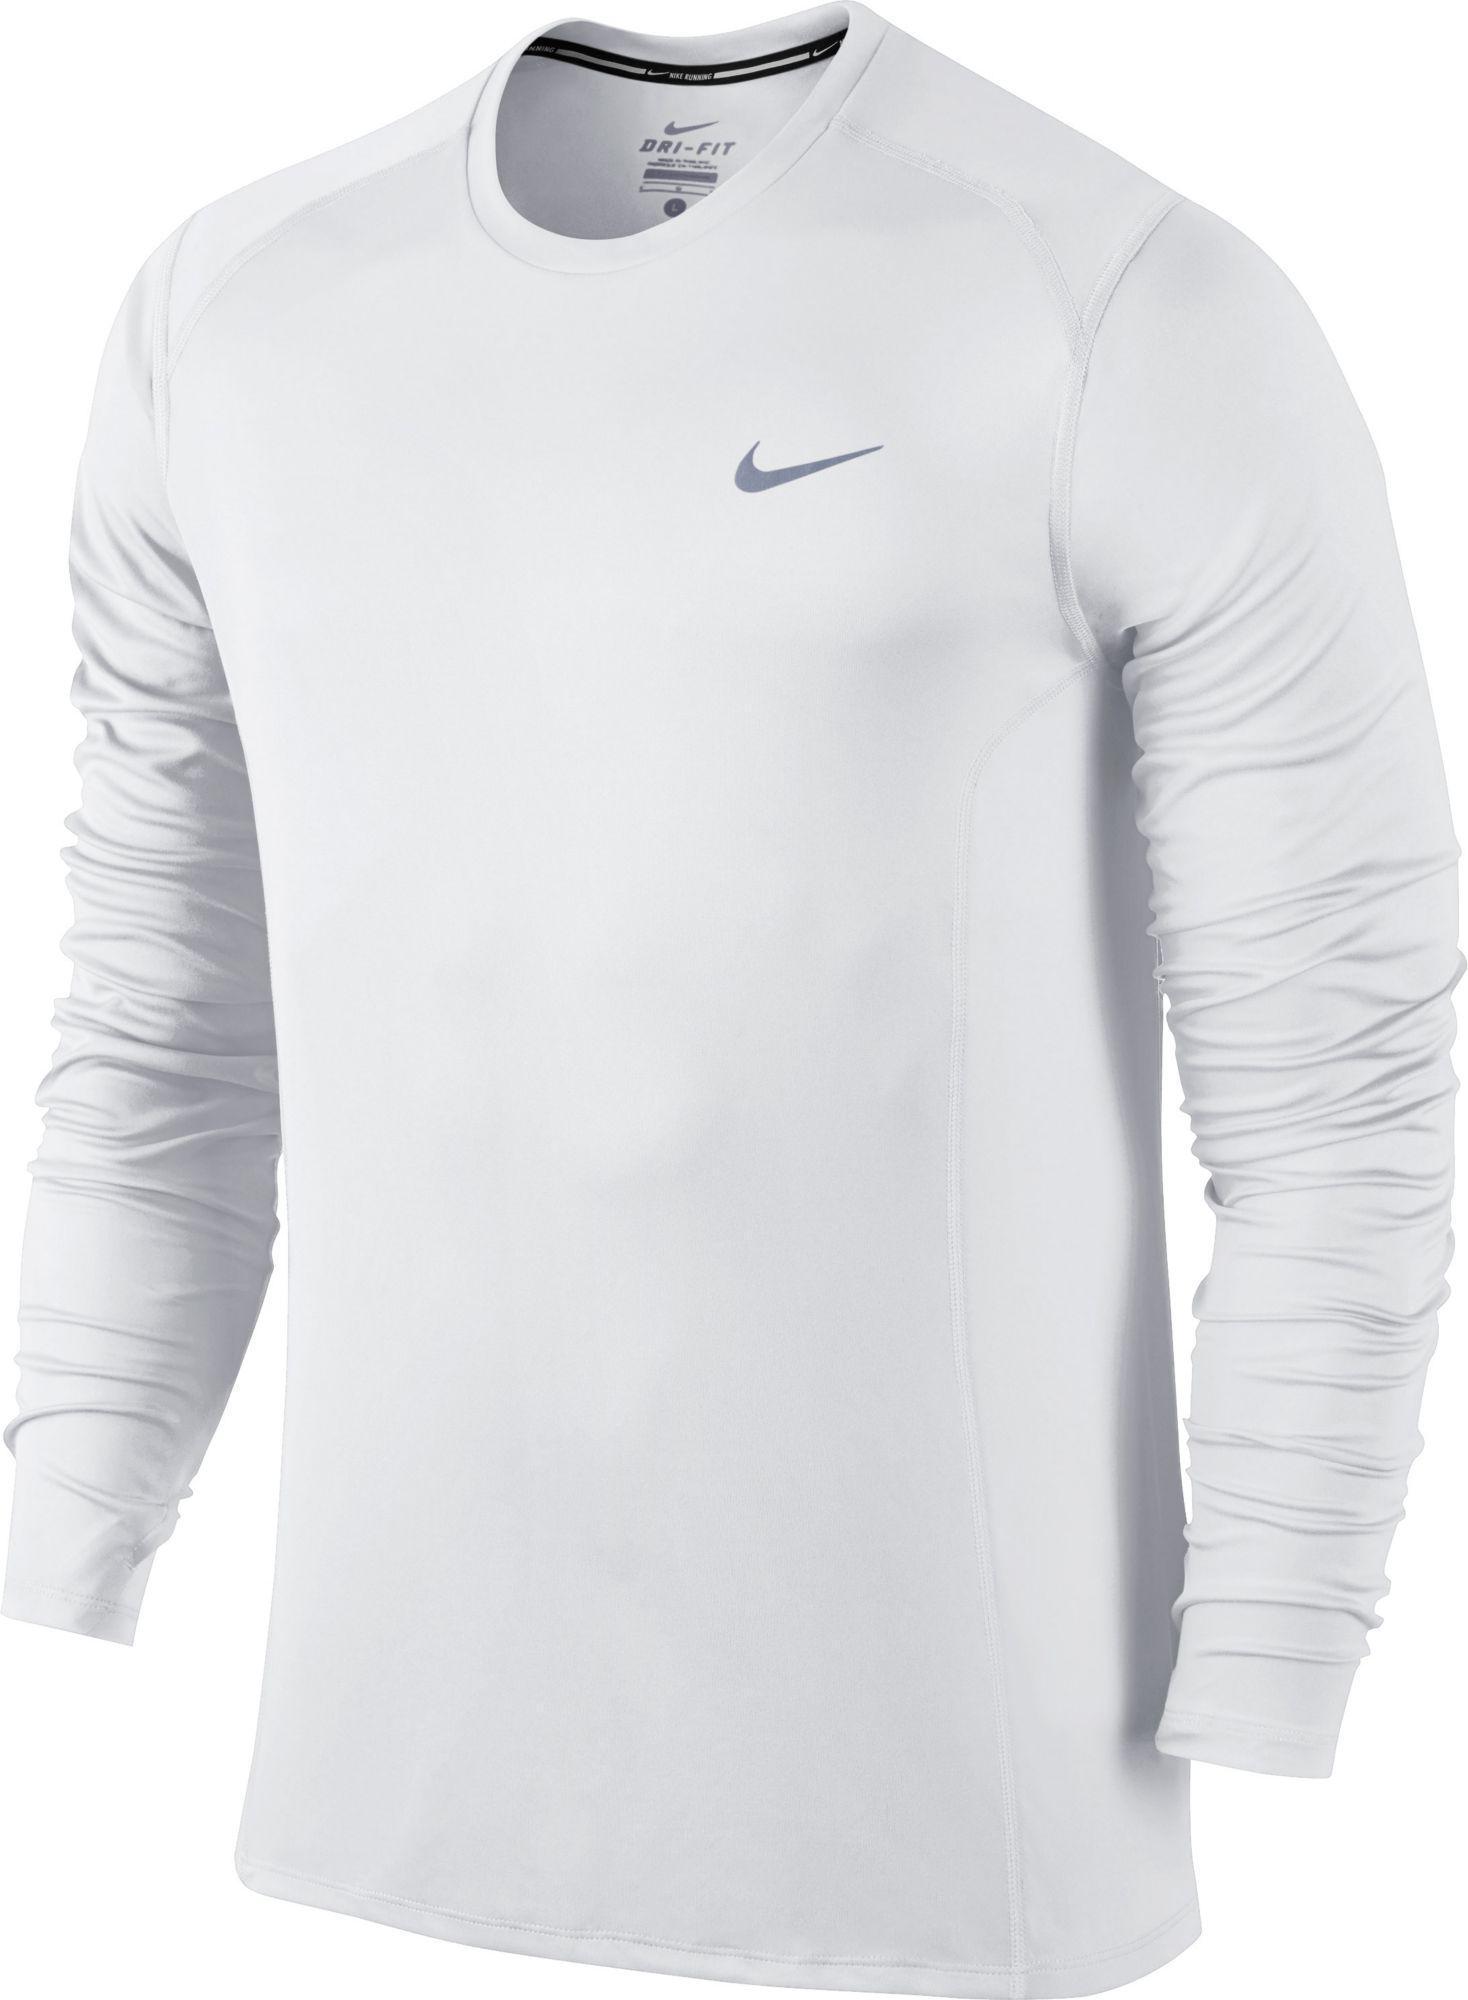 White long sleeve dri fit dicks sporting goods